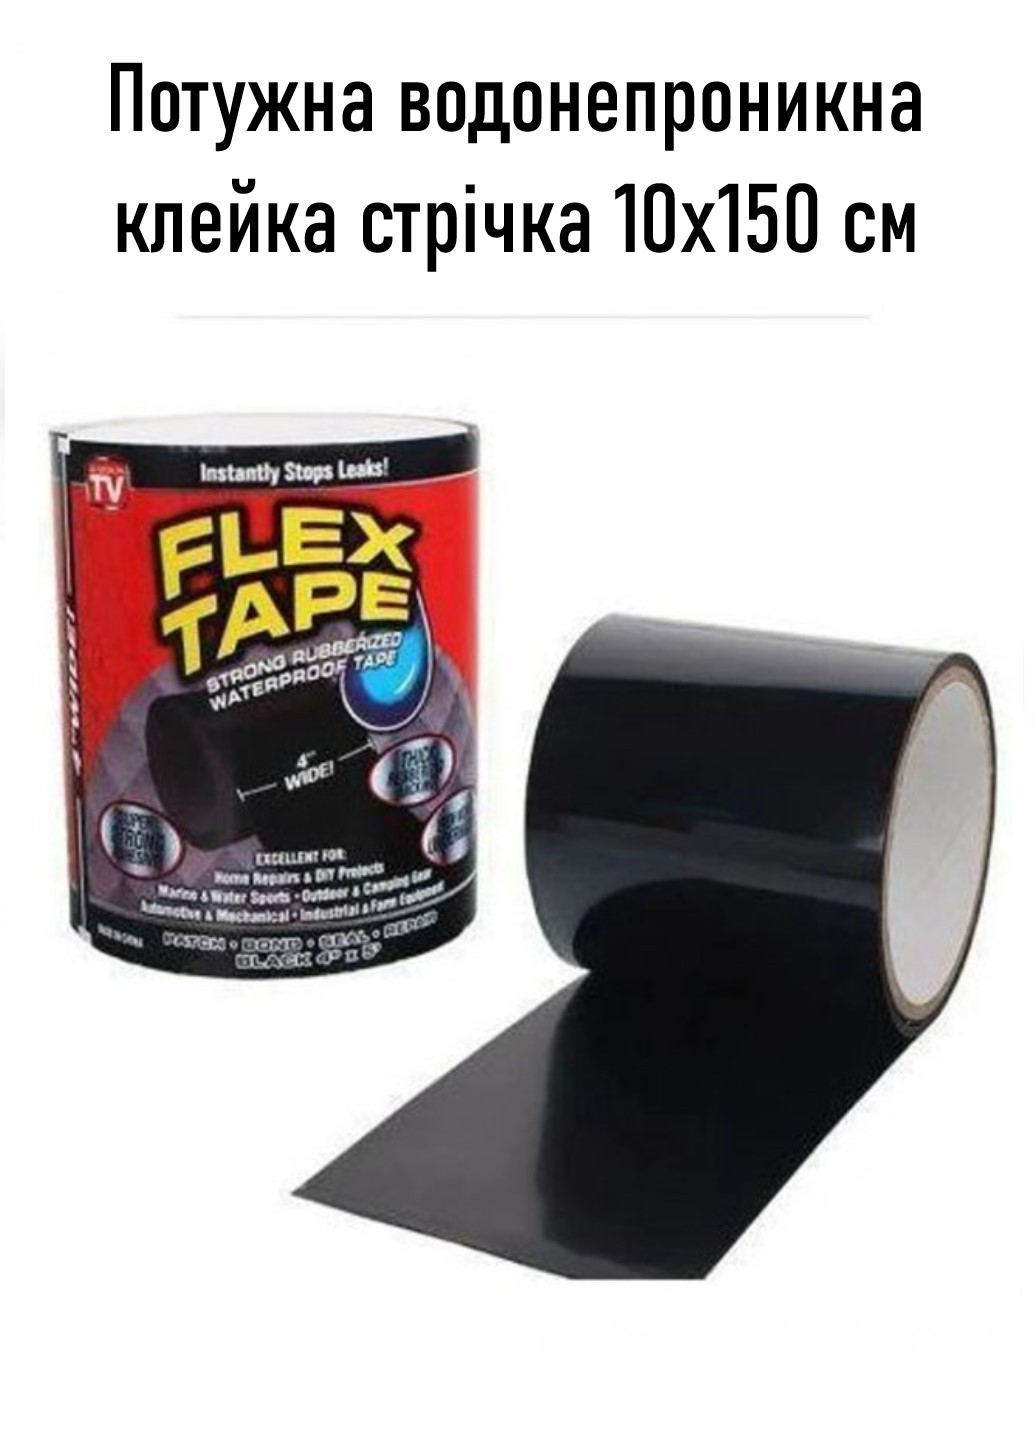 Ізоляційна водонепроникна клейка стрічка скотч Tape Black 10х150cm Flex (258574399)